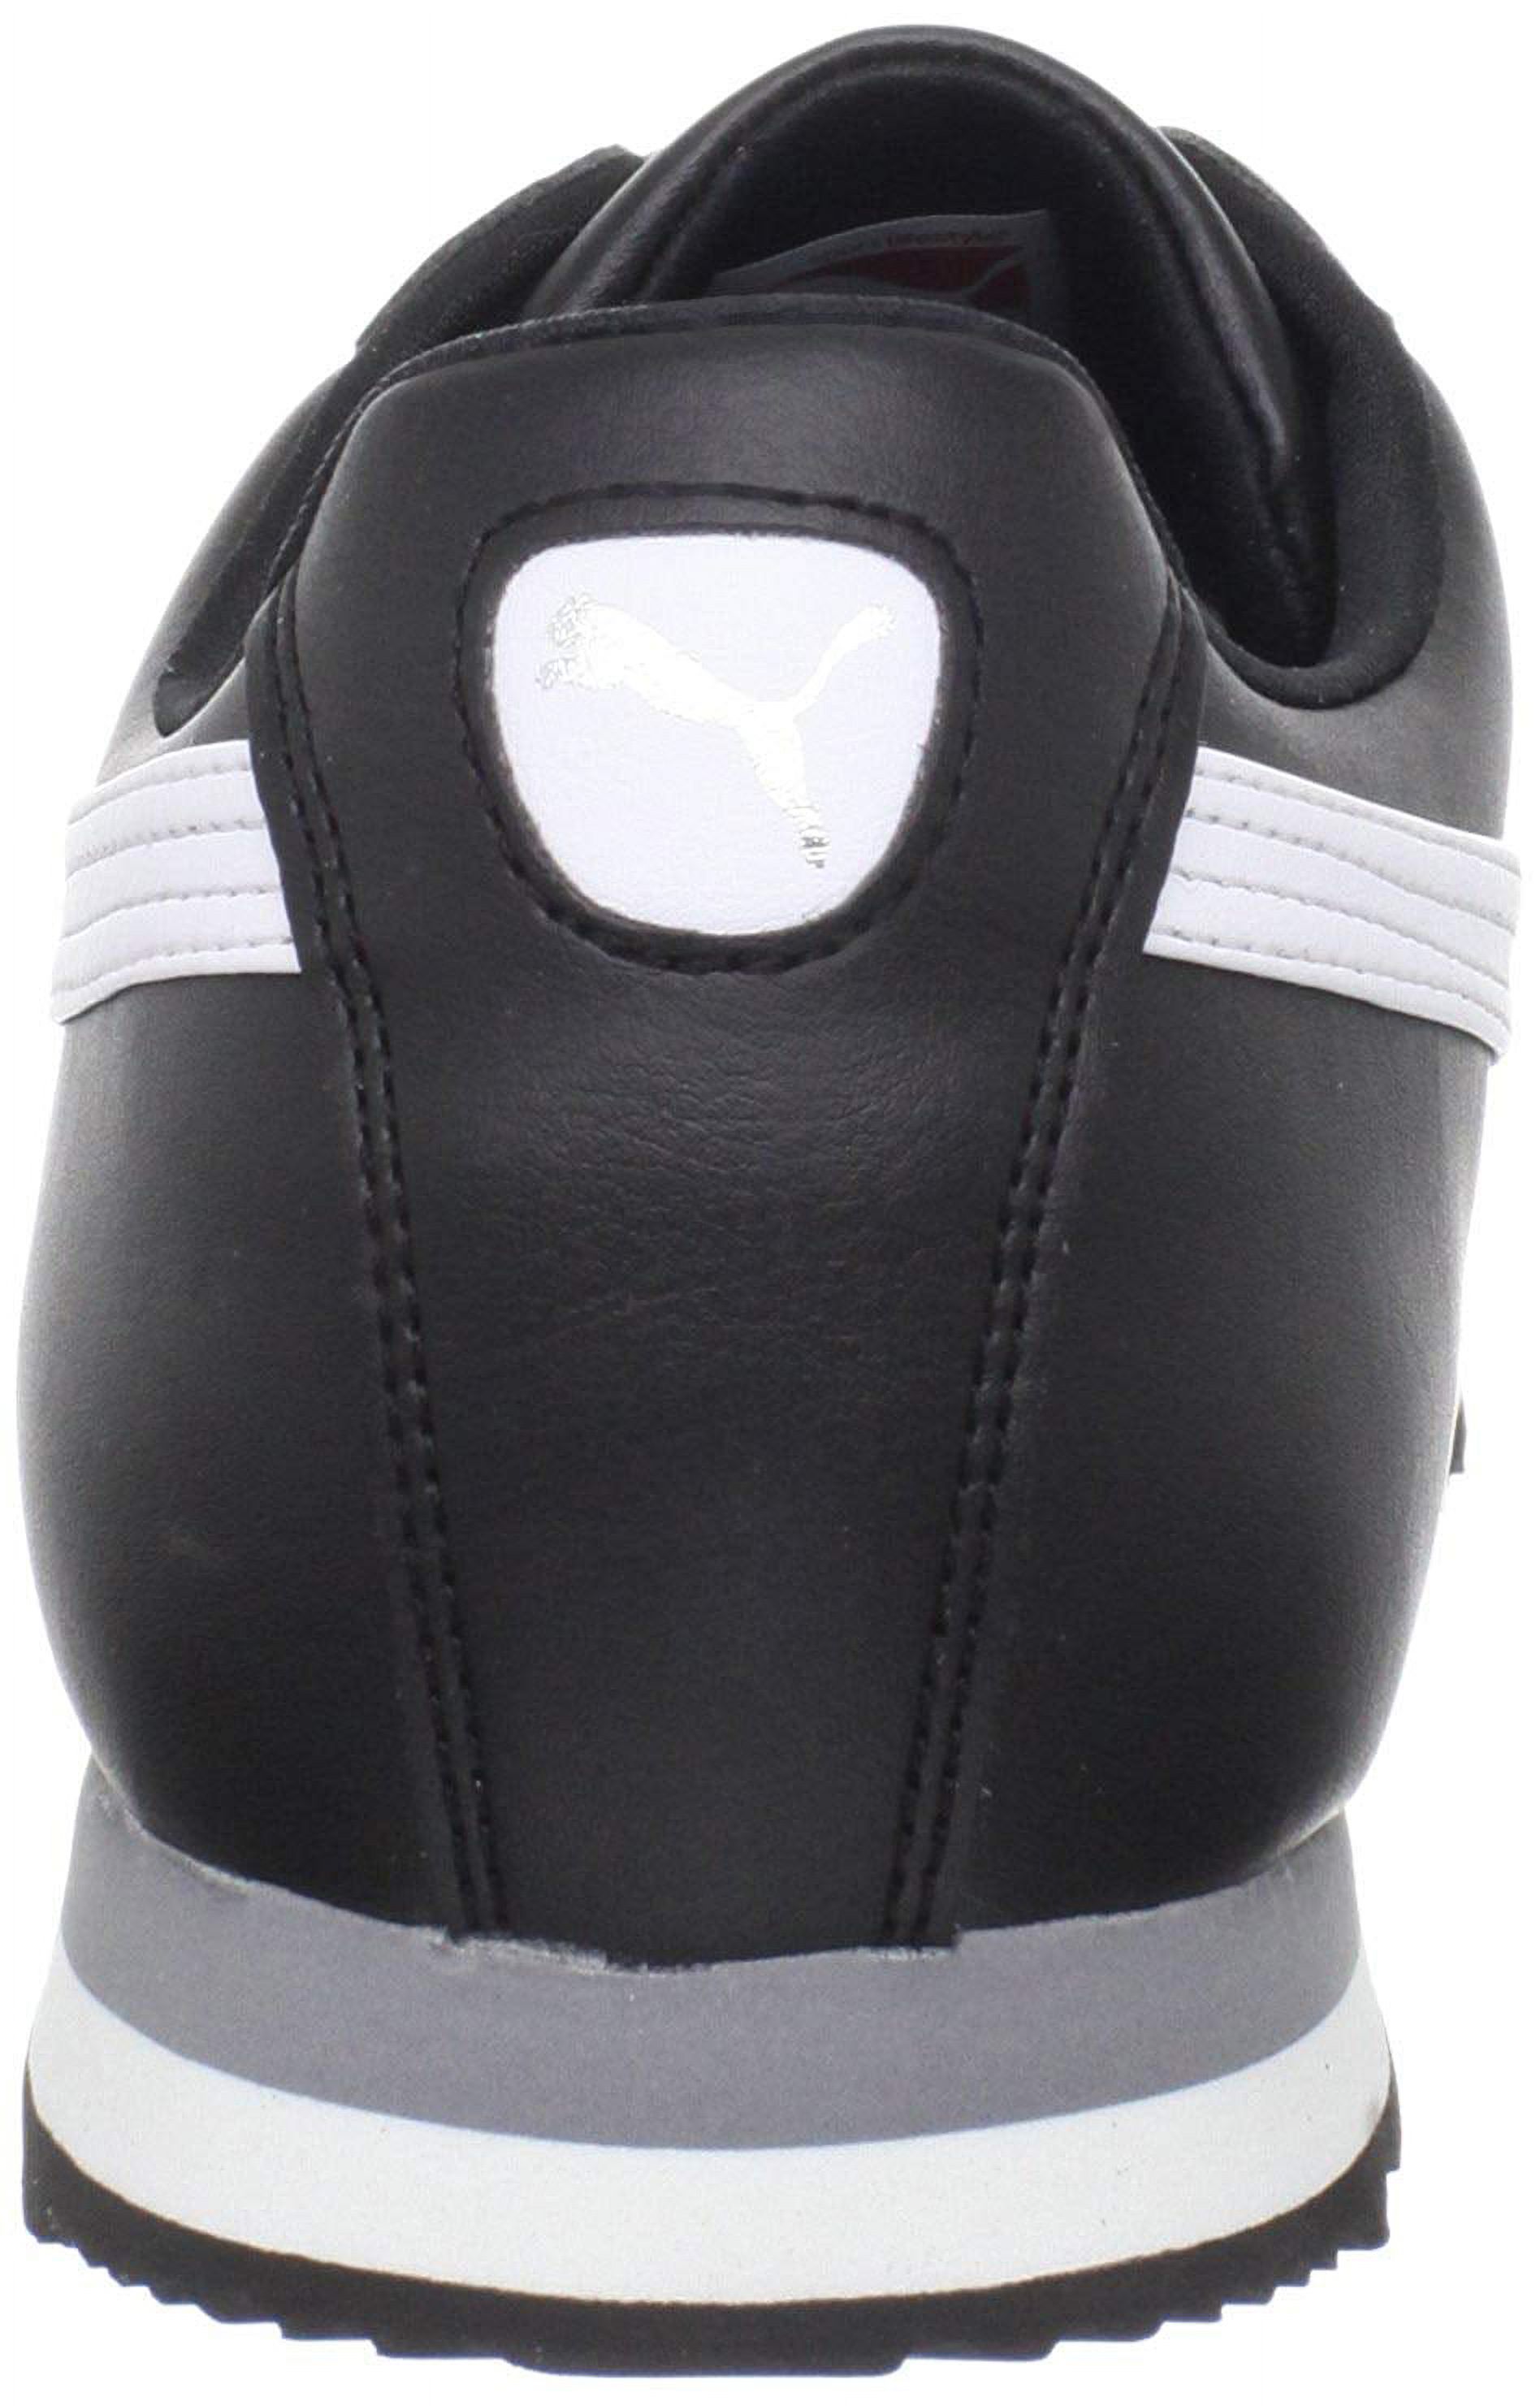 Puma Roma Basic Men's Shoes Black/White/Puma Sliver 353572-11 - image 2 of 7